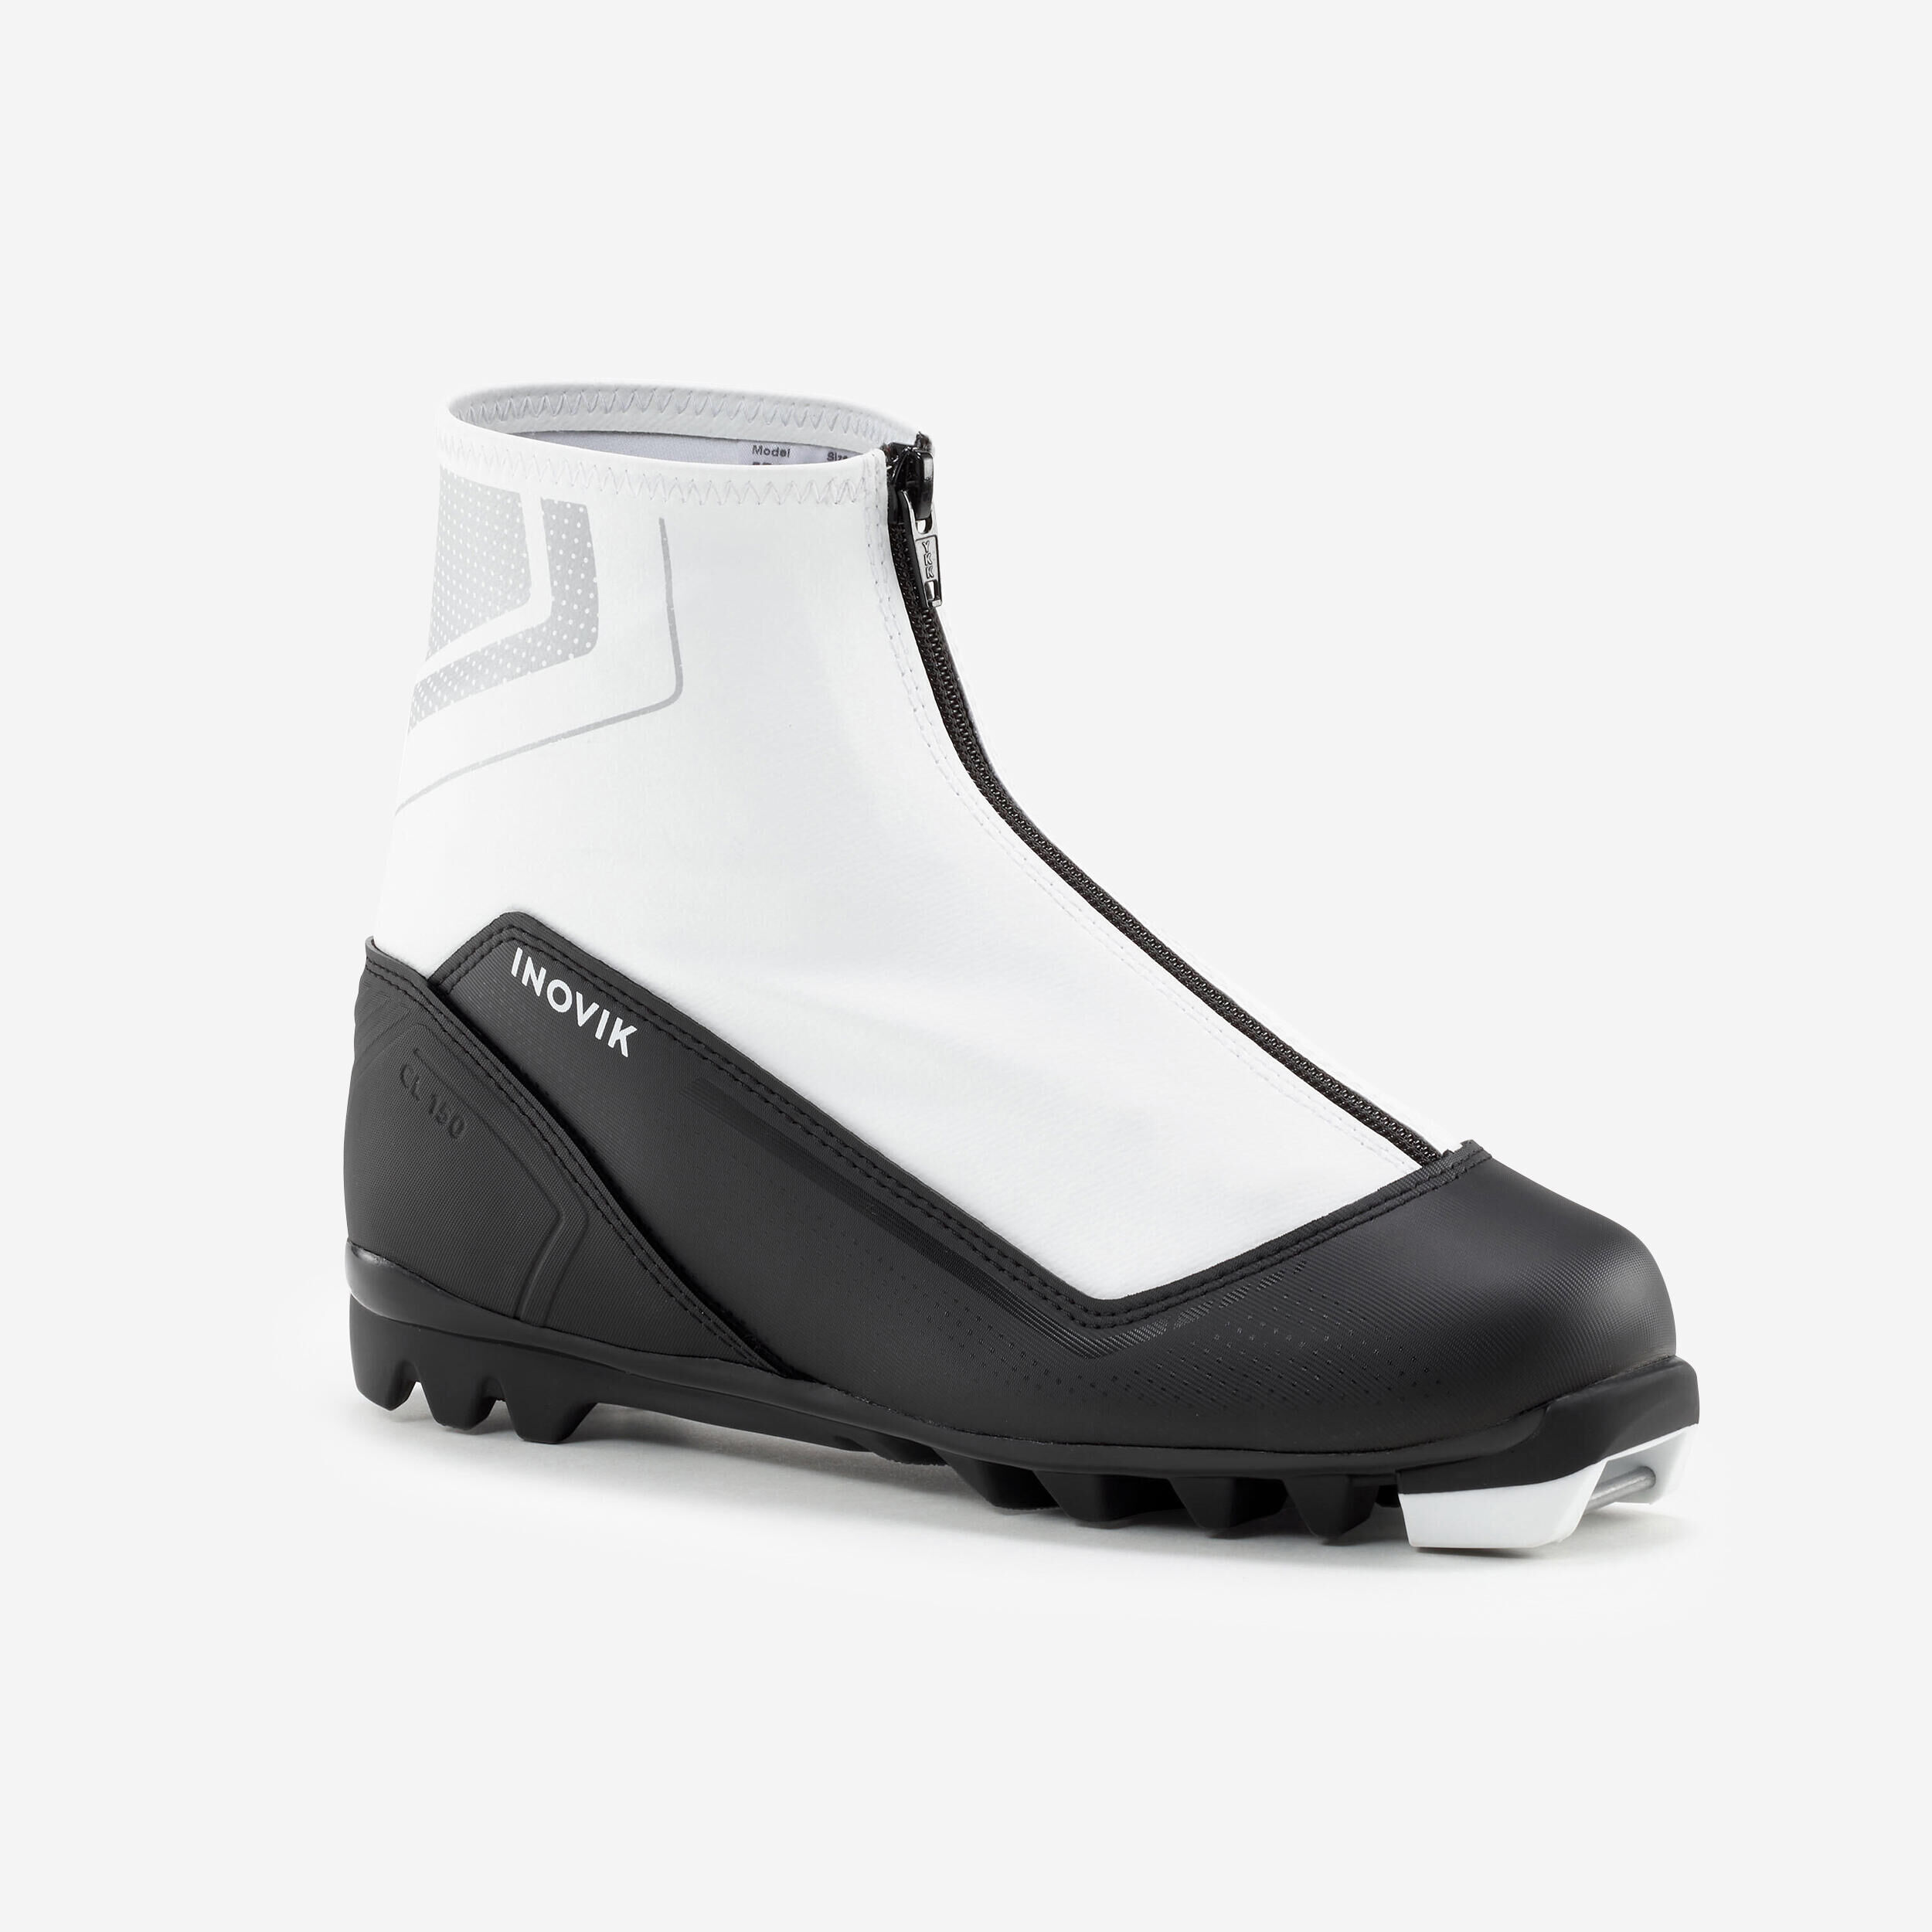 INOVIK WOMEN’S Classic Cross-Country Ski Boots - XC S BOOTS 150